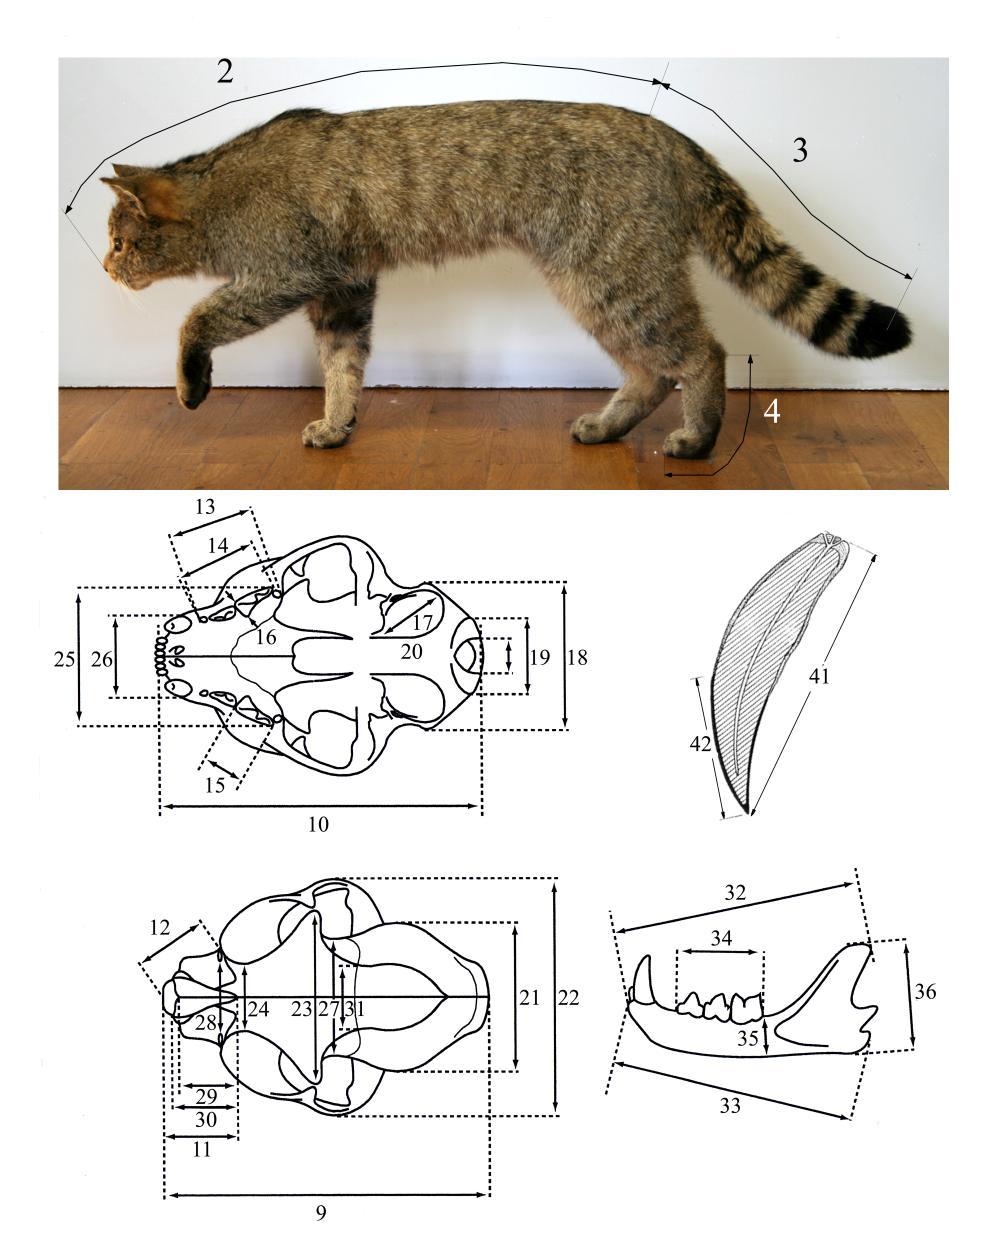 Identification of hybrid cats: Morphometrics Krüger, M., Hertwig, S. T., Jetschke, G. and Fischer, M. S. (2009).